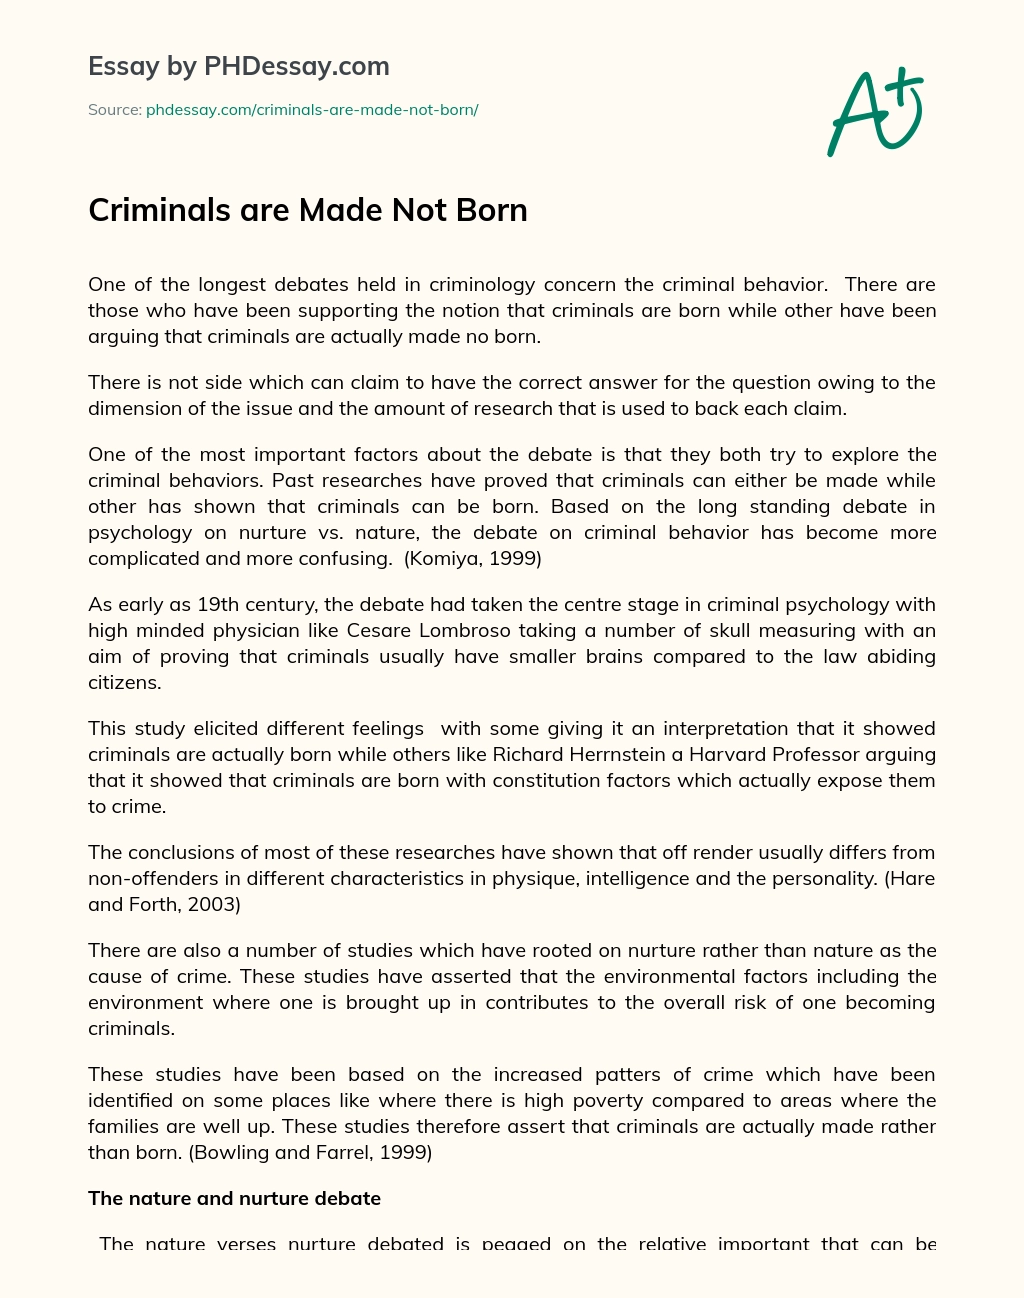 Criminals are Made Not Born essay